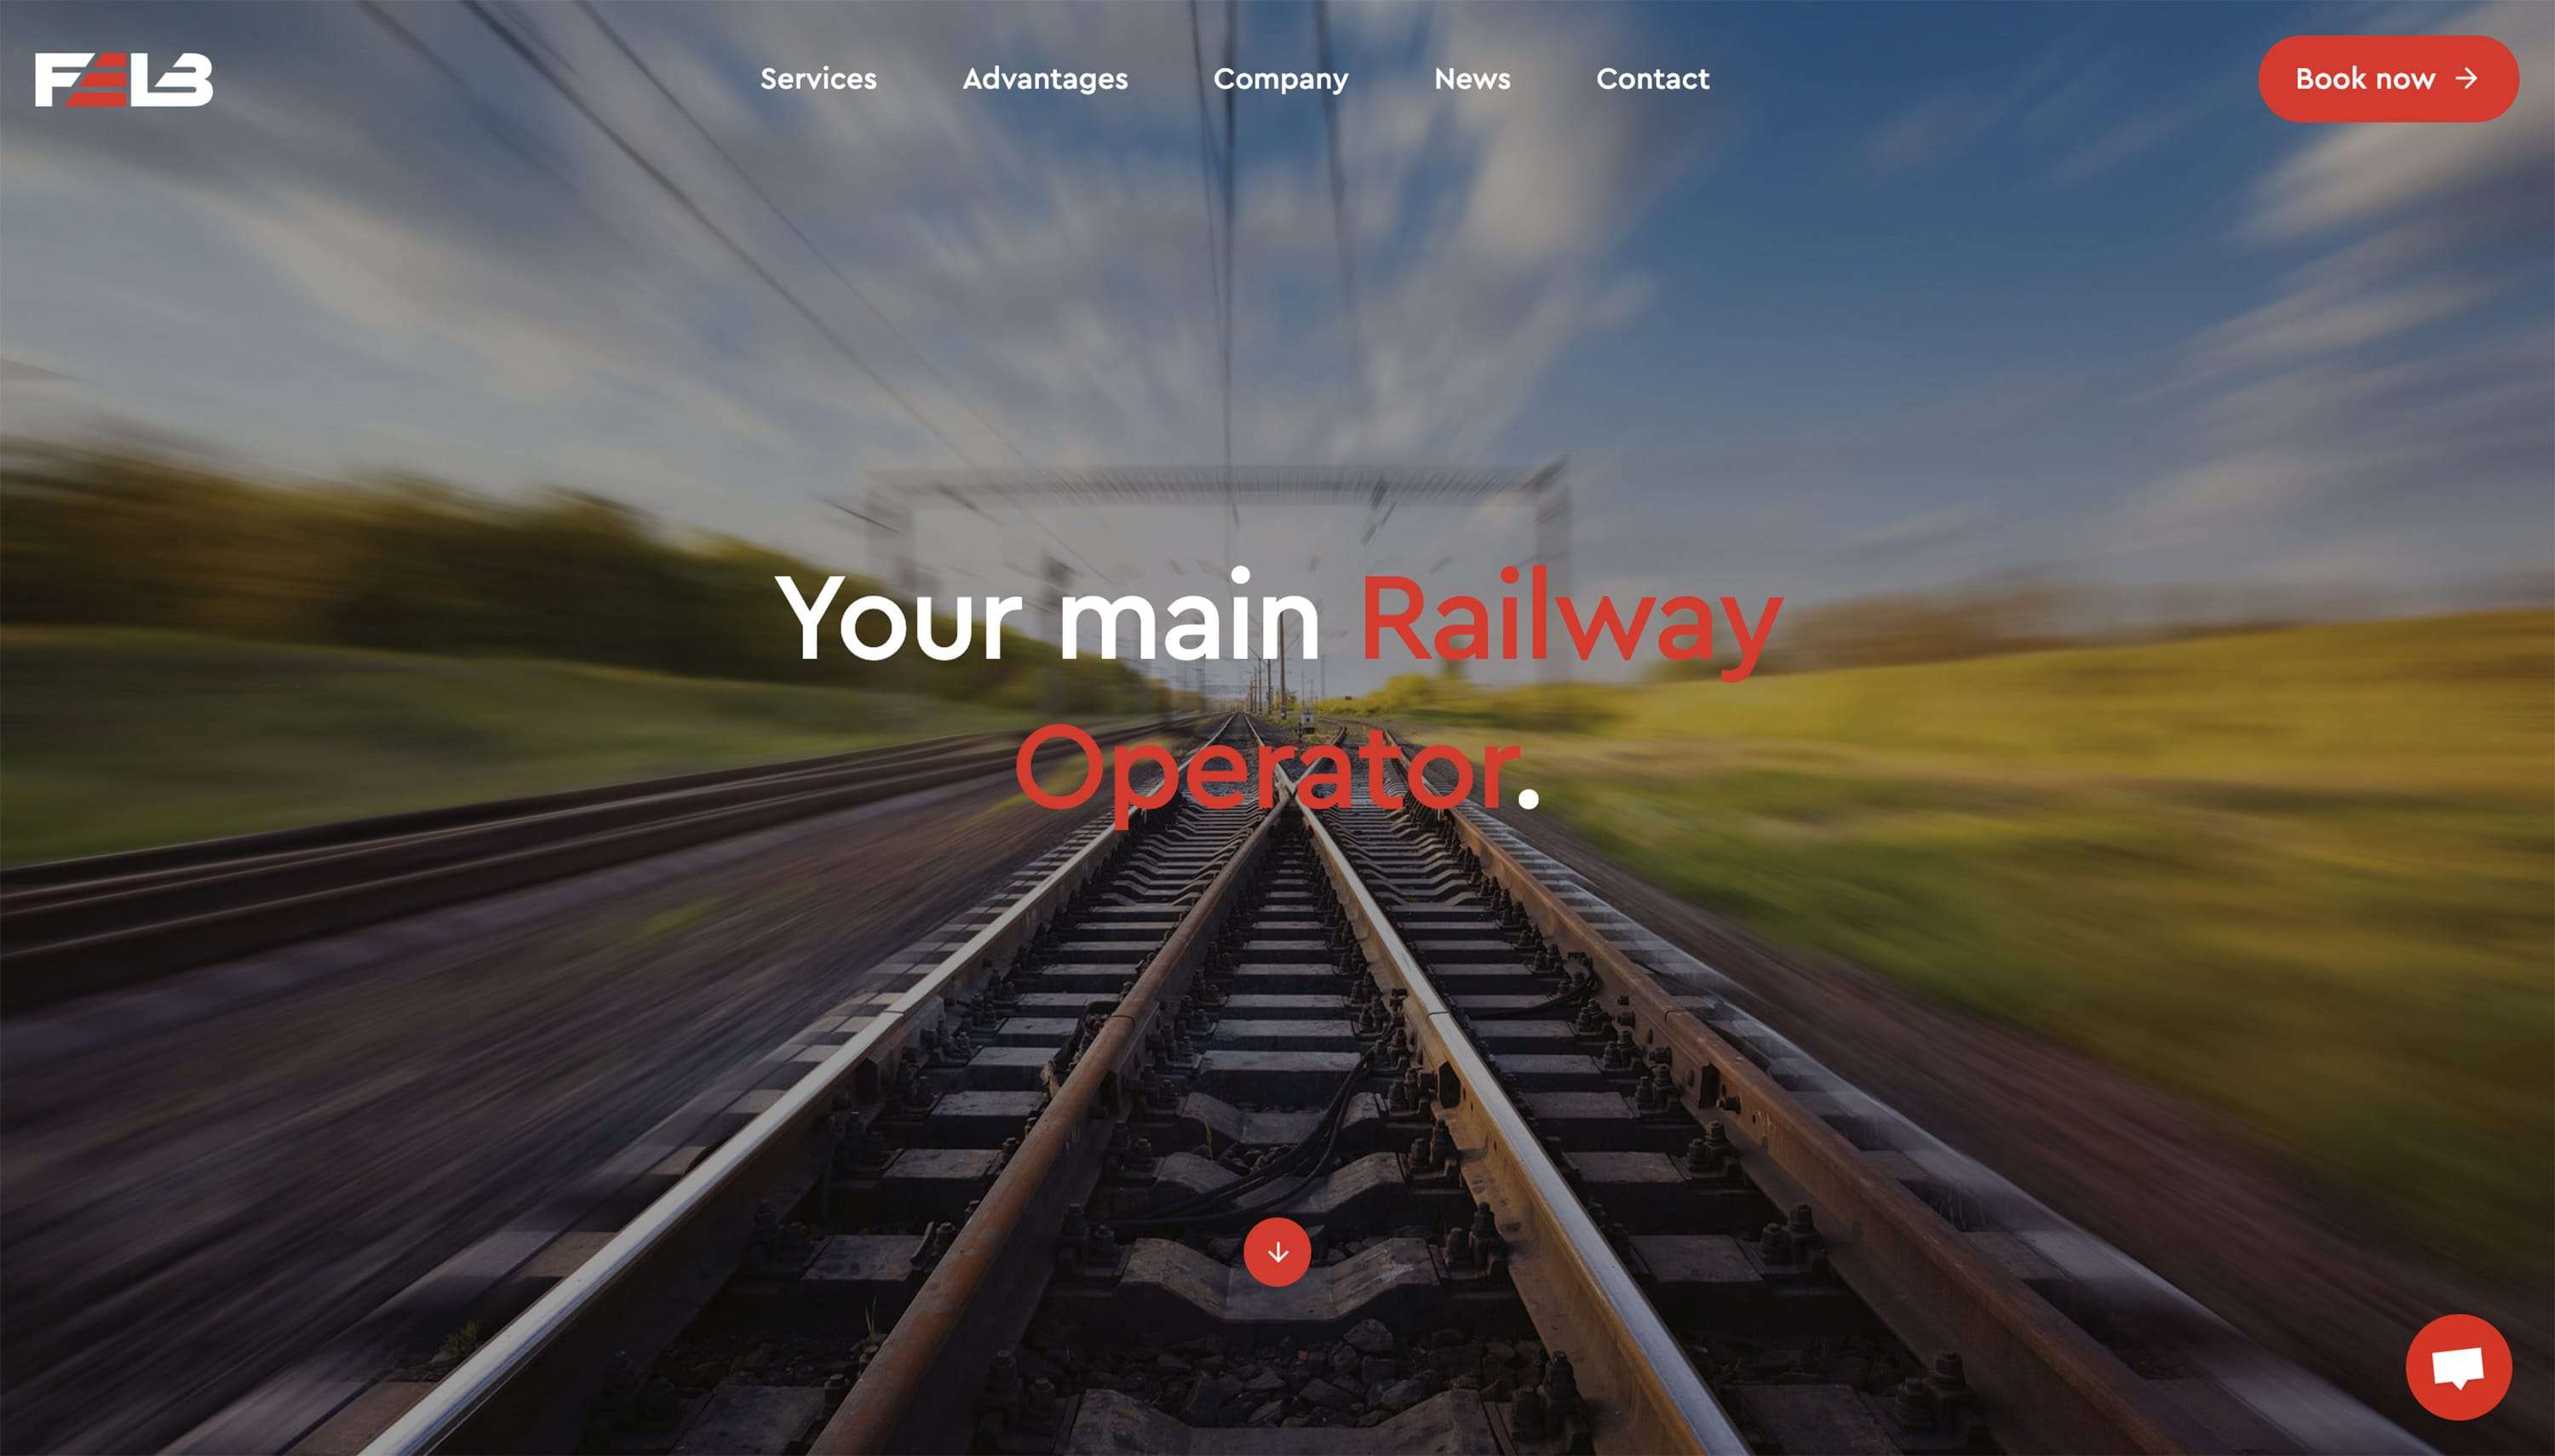 Your main Railway Operator.